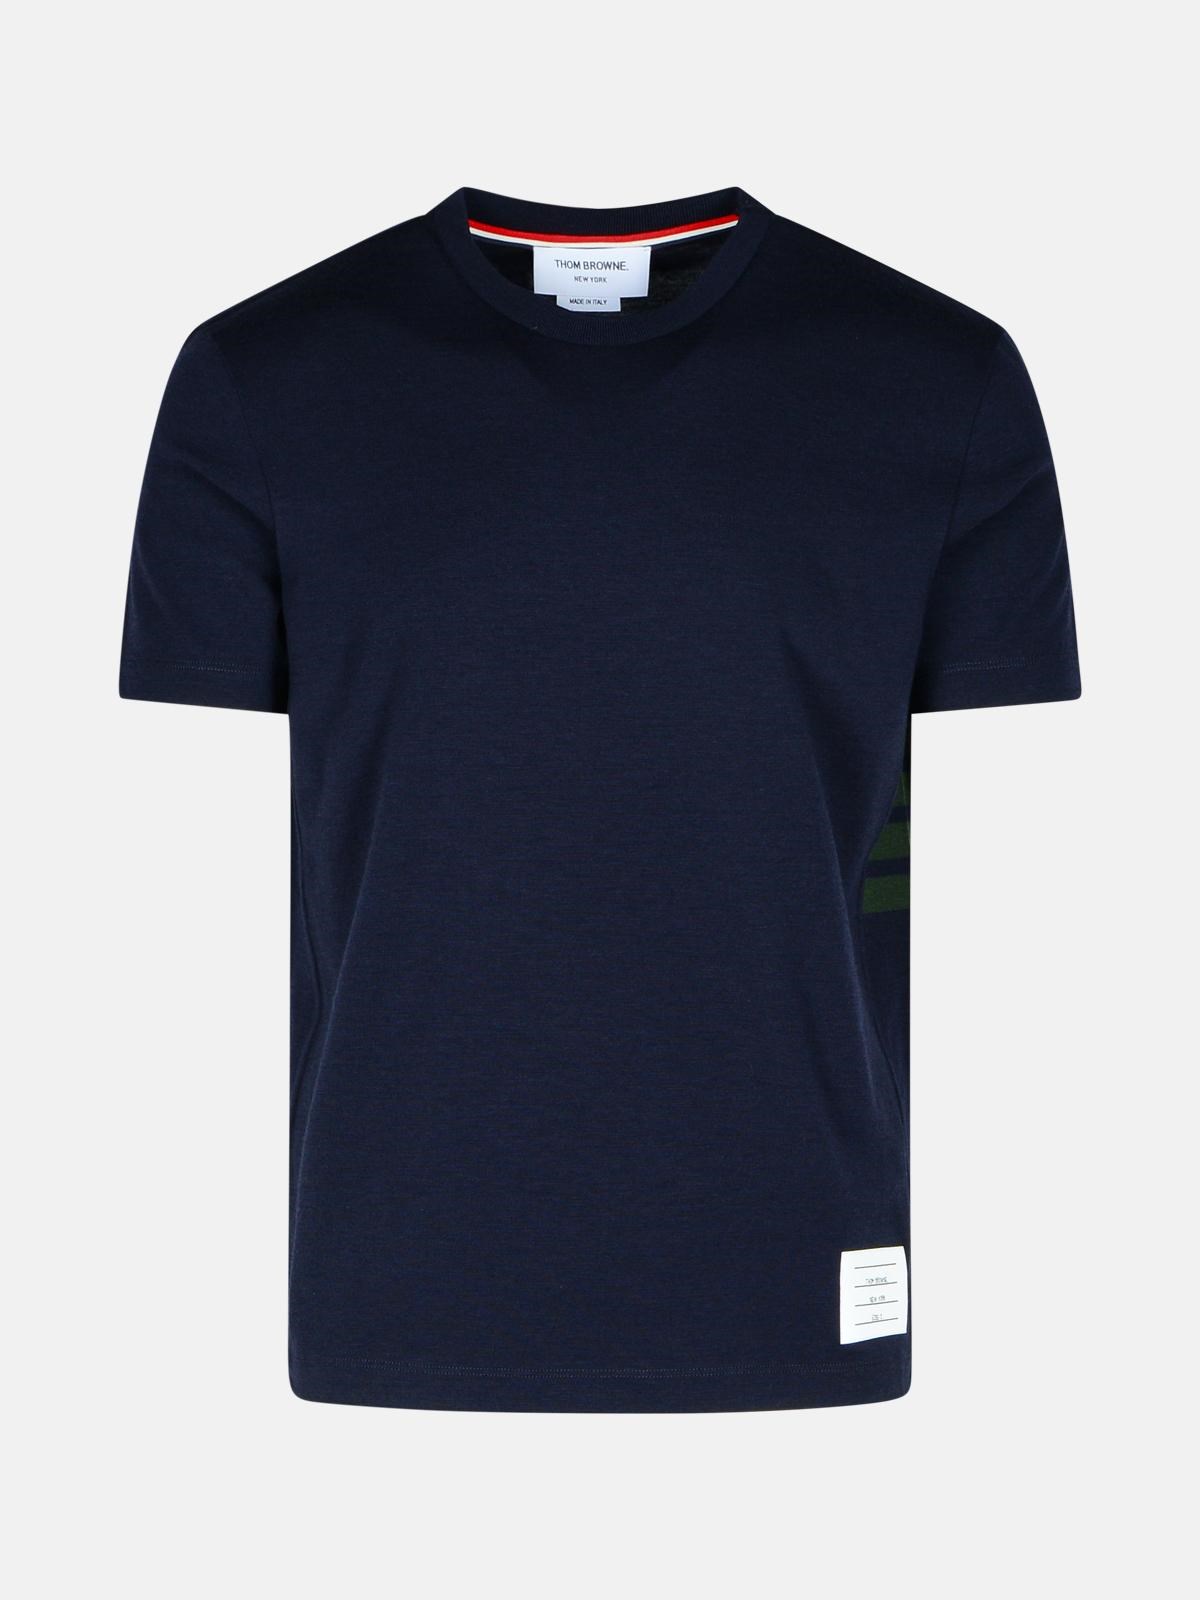 Thom Browne '4 Bar' Navy Wool T-shirt In Blue